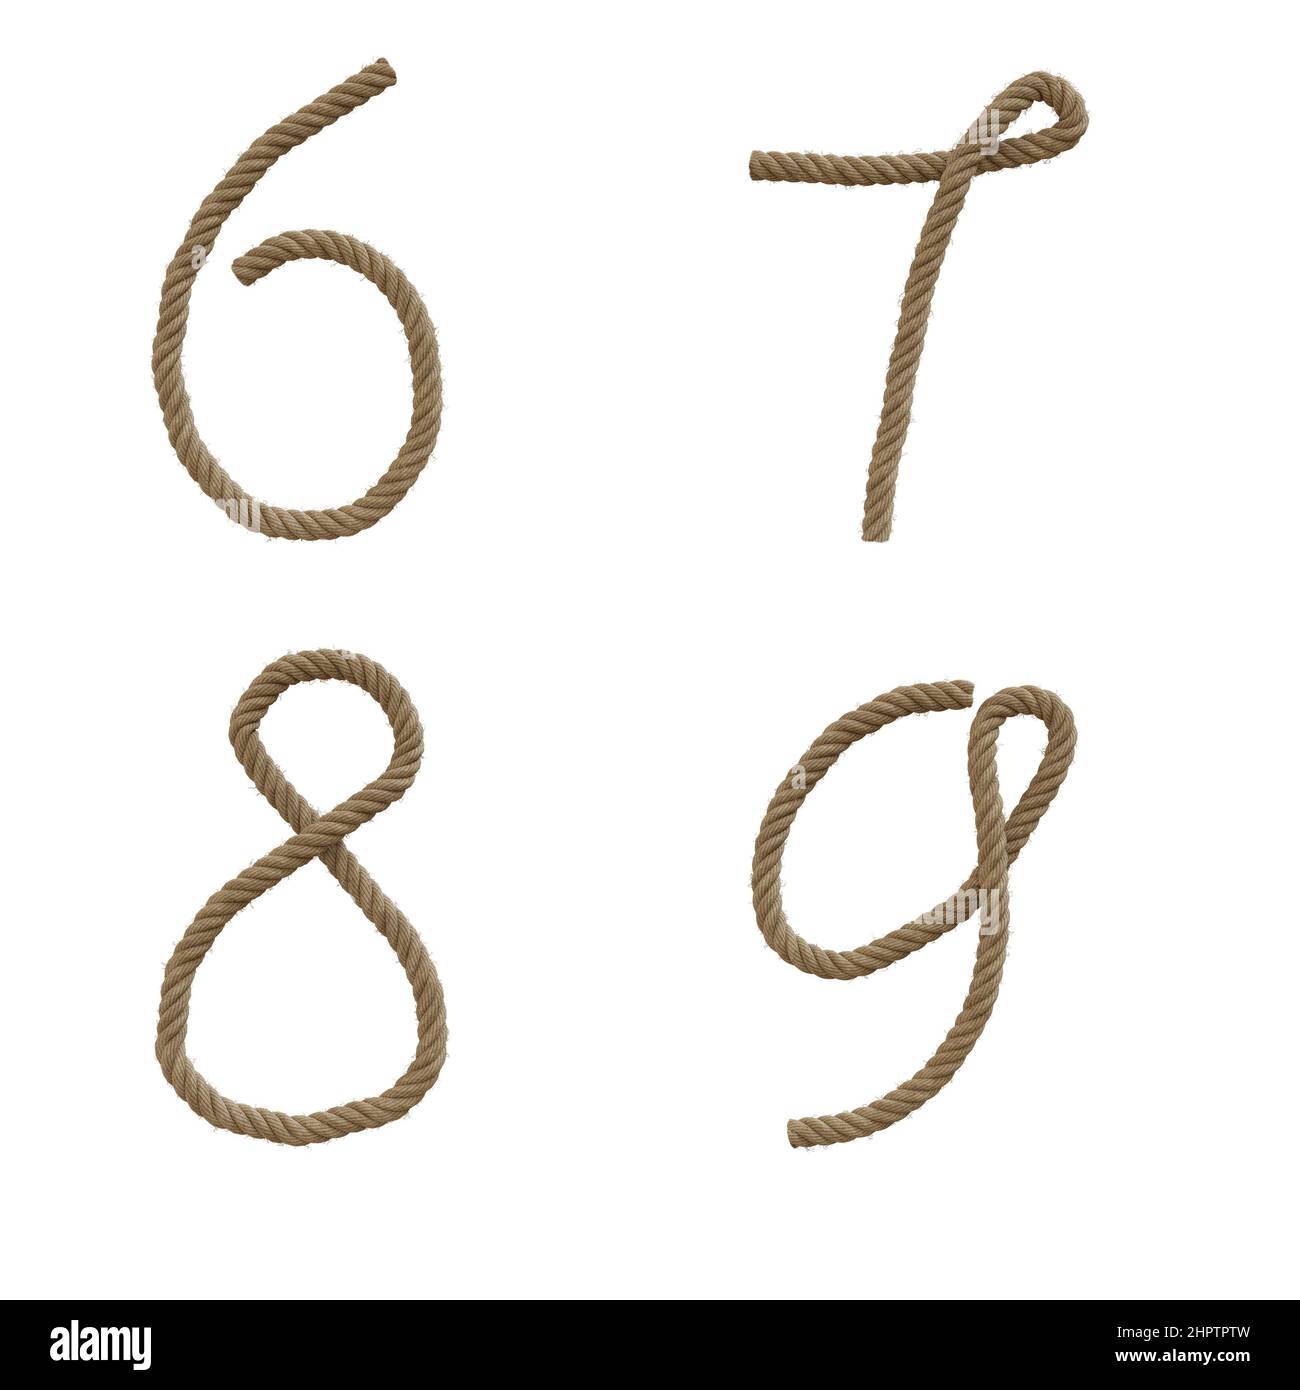 3D rendering of hemp rope capital letters alphabet - digits 6-9 Stock Photo